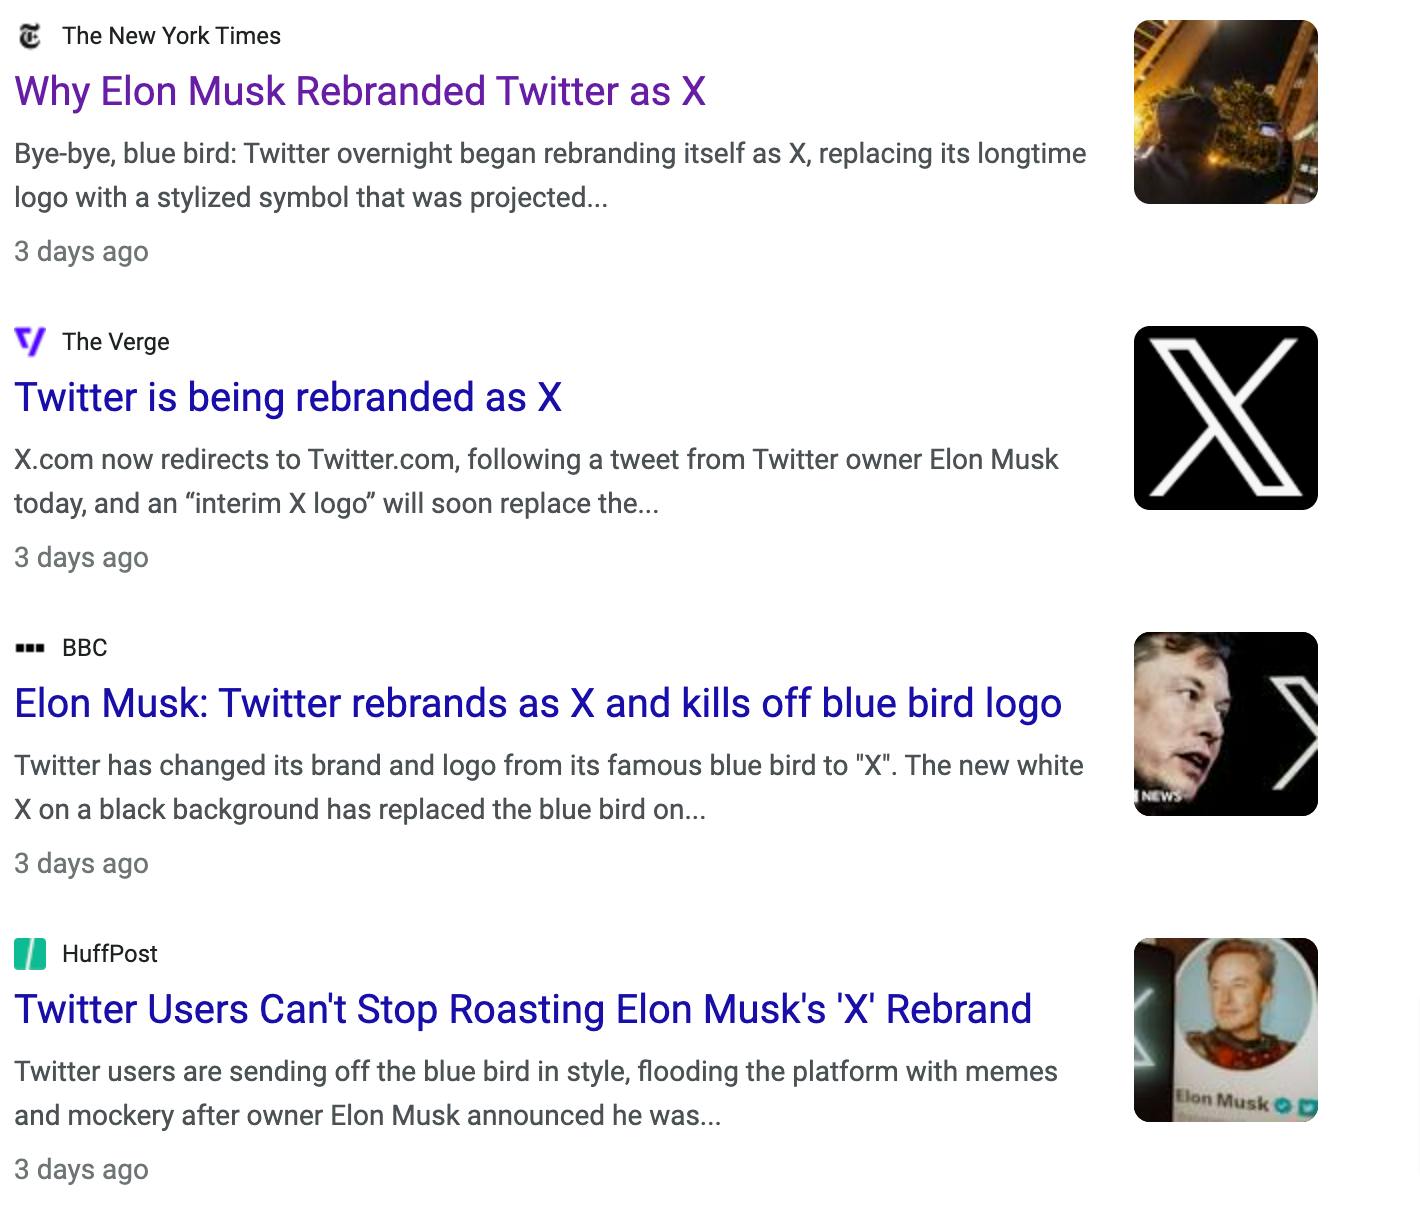 Widespread criticism regarding Elon Musk's move to Rebrand Twitter to X